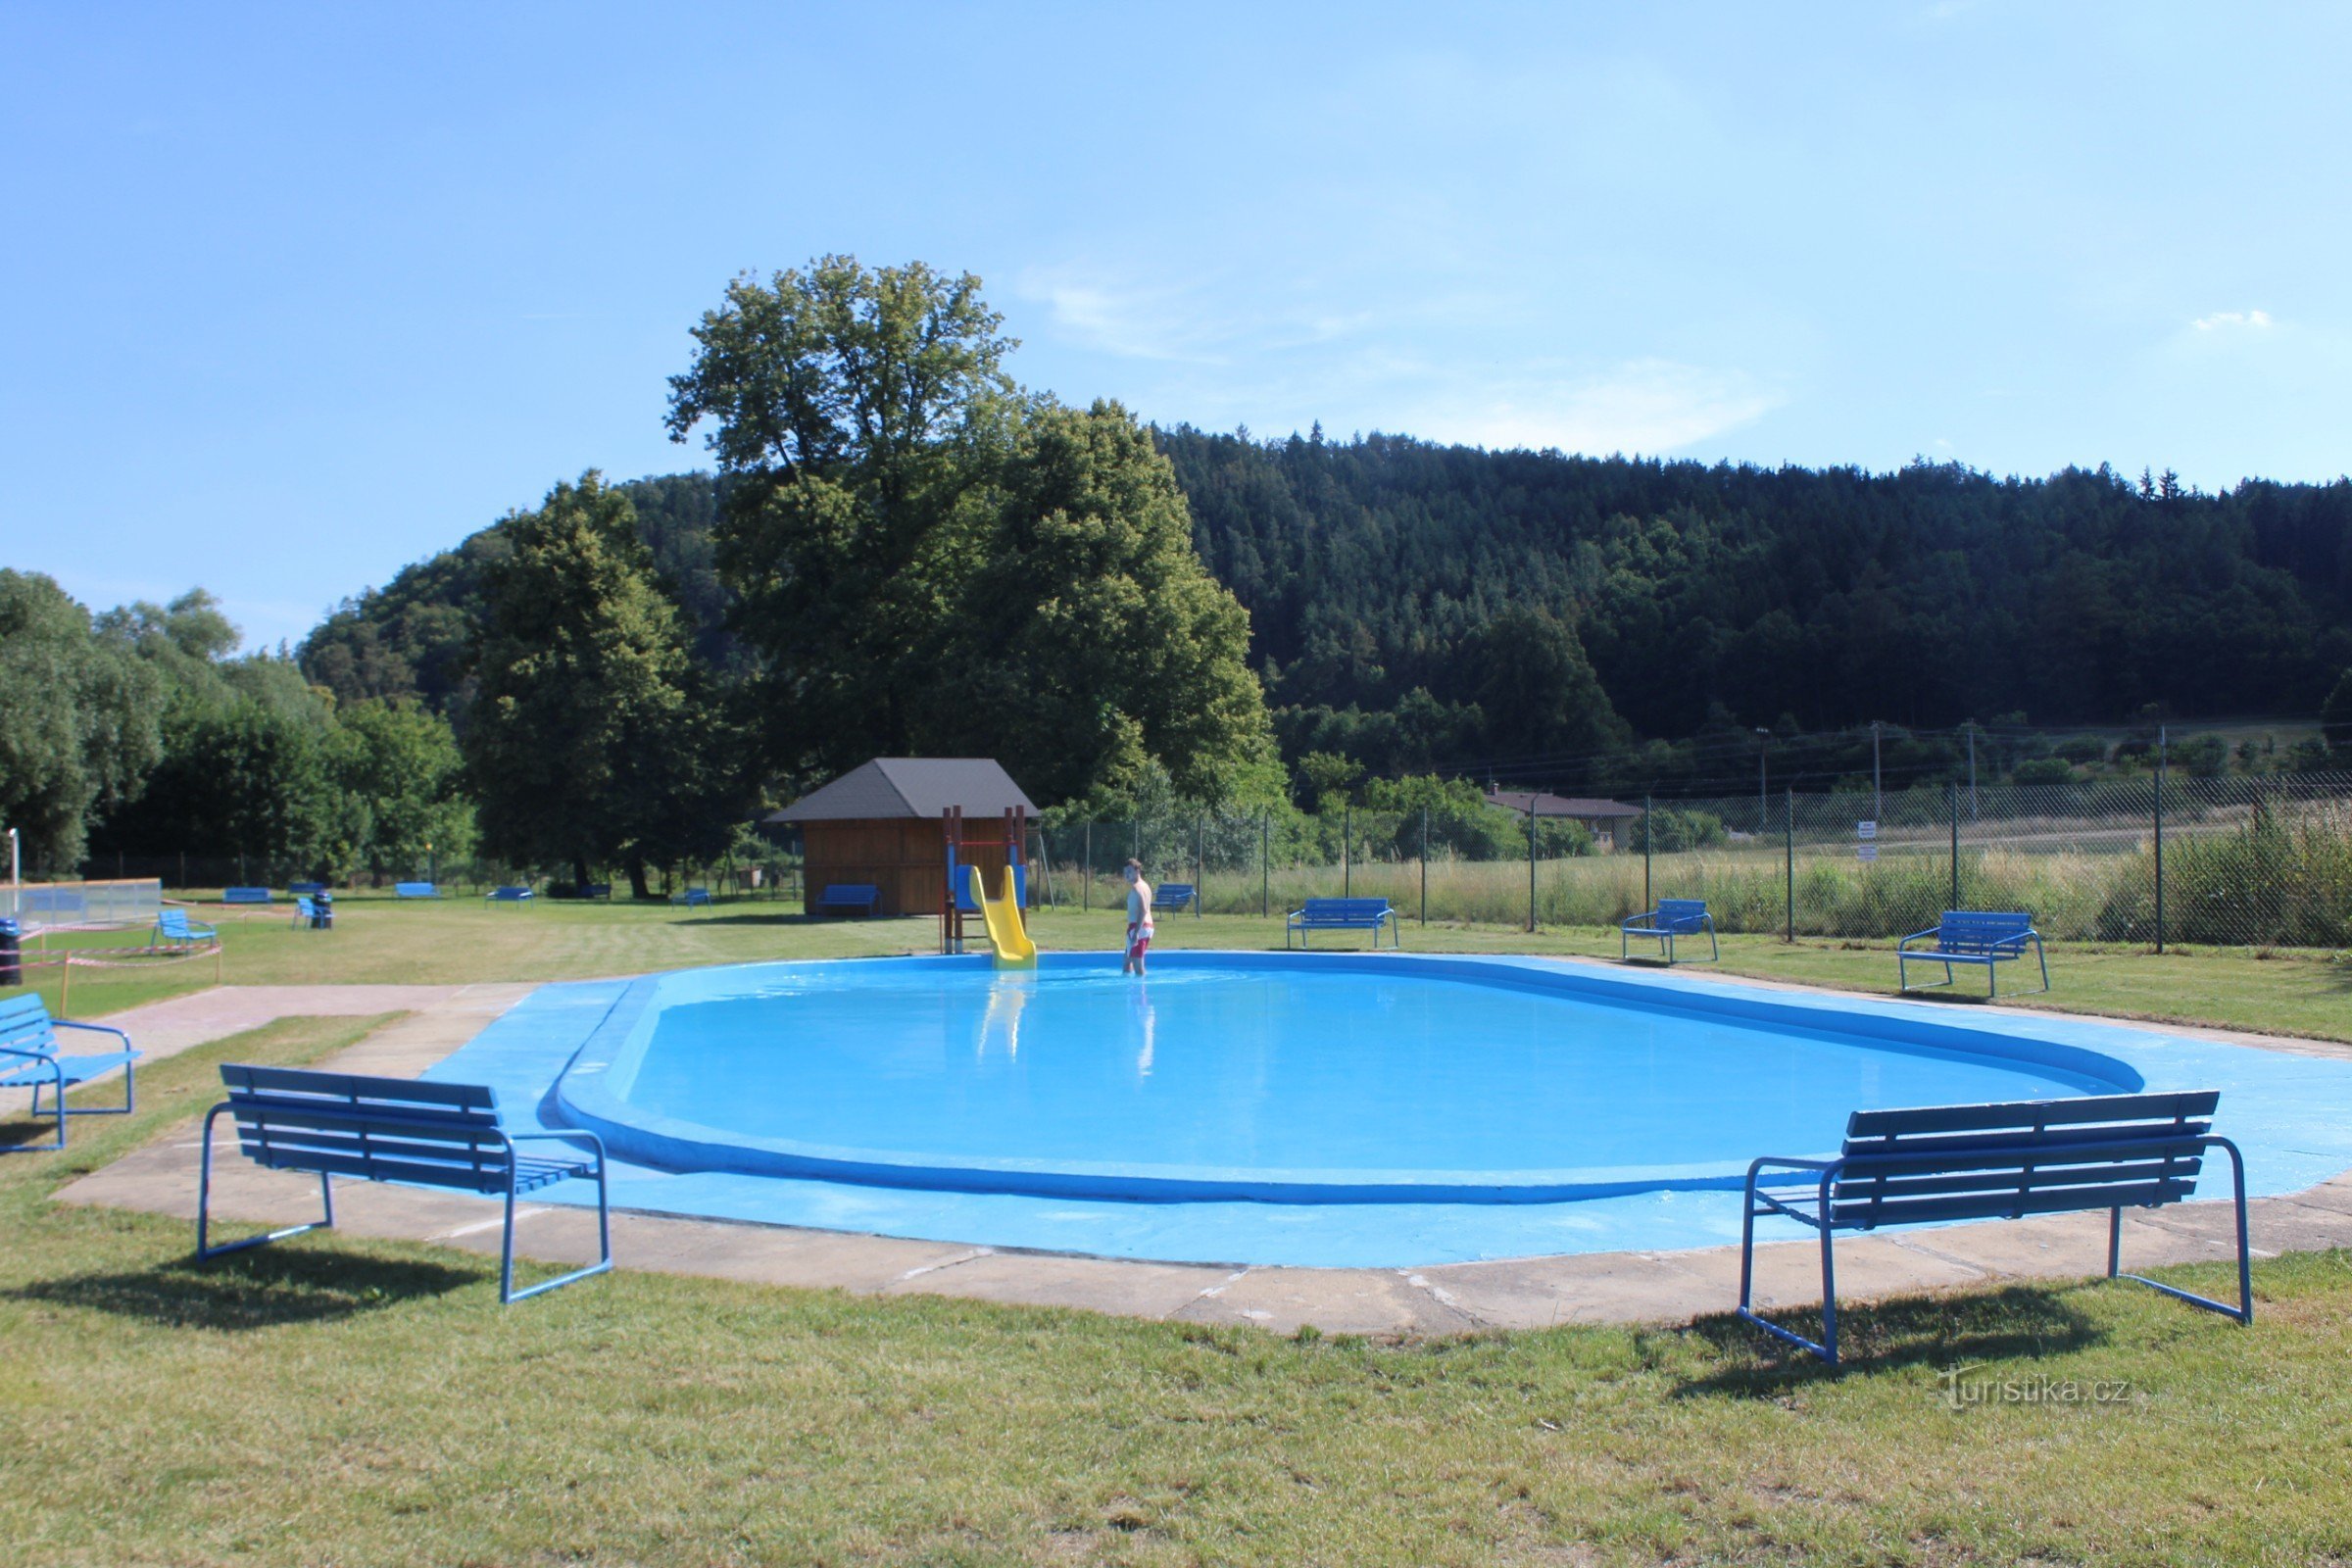 Tišnovské swimmingpool - børnepool 2014